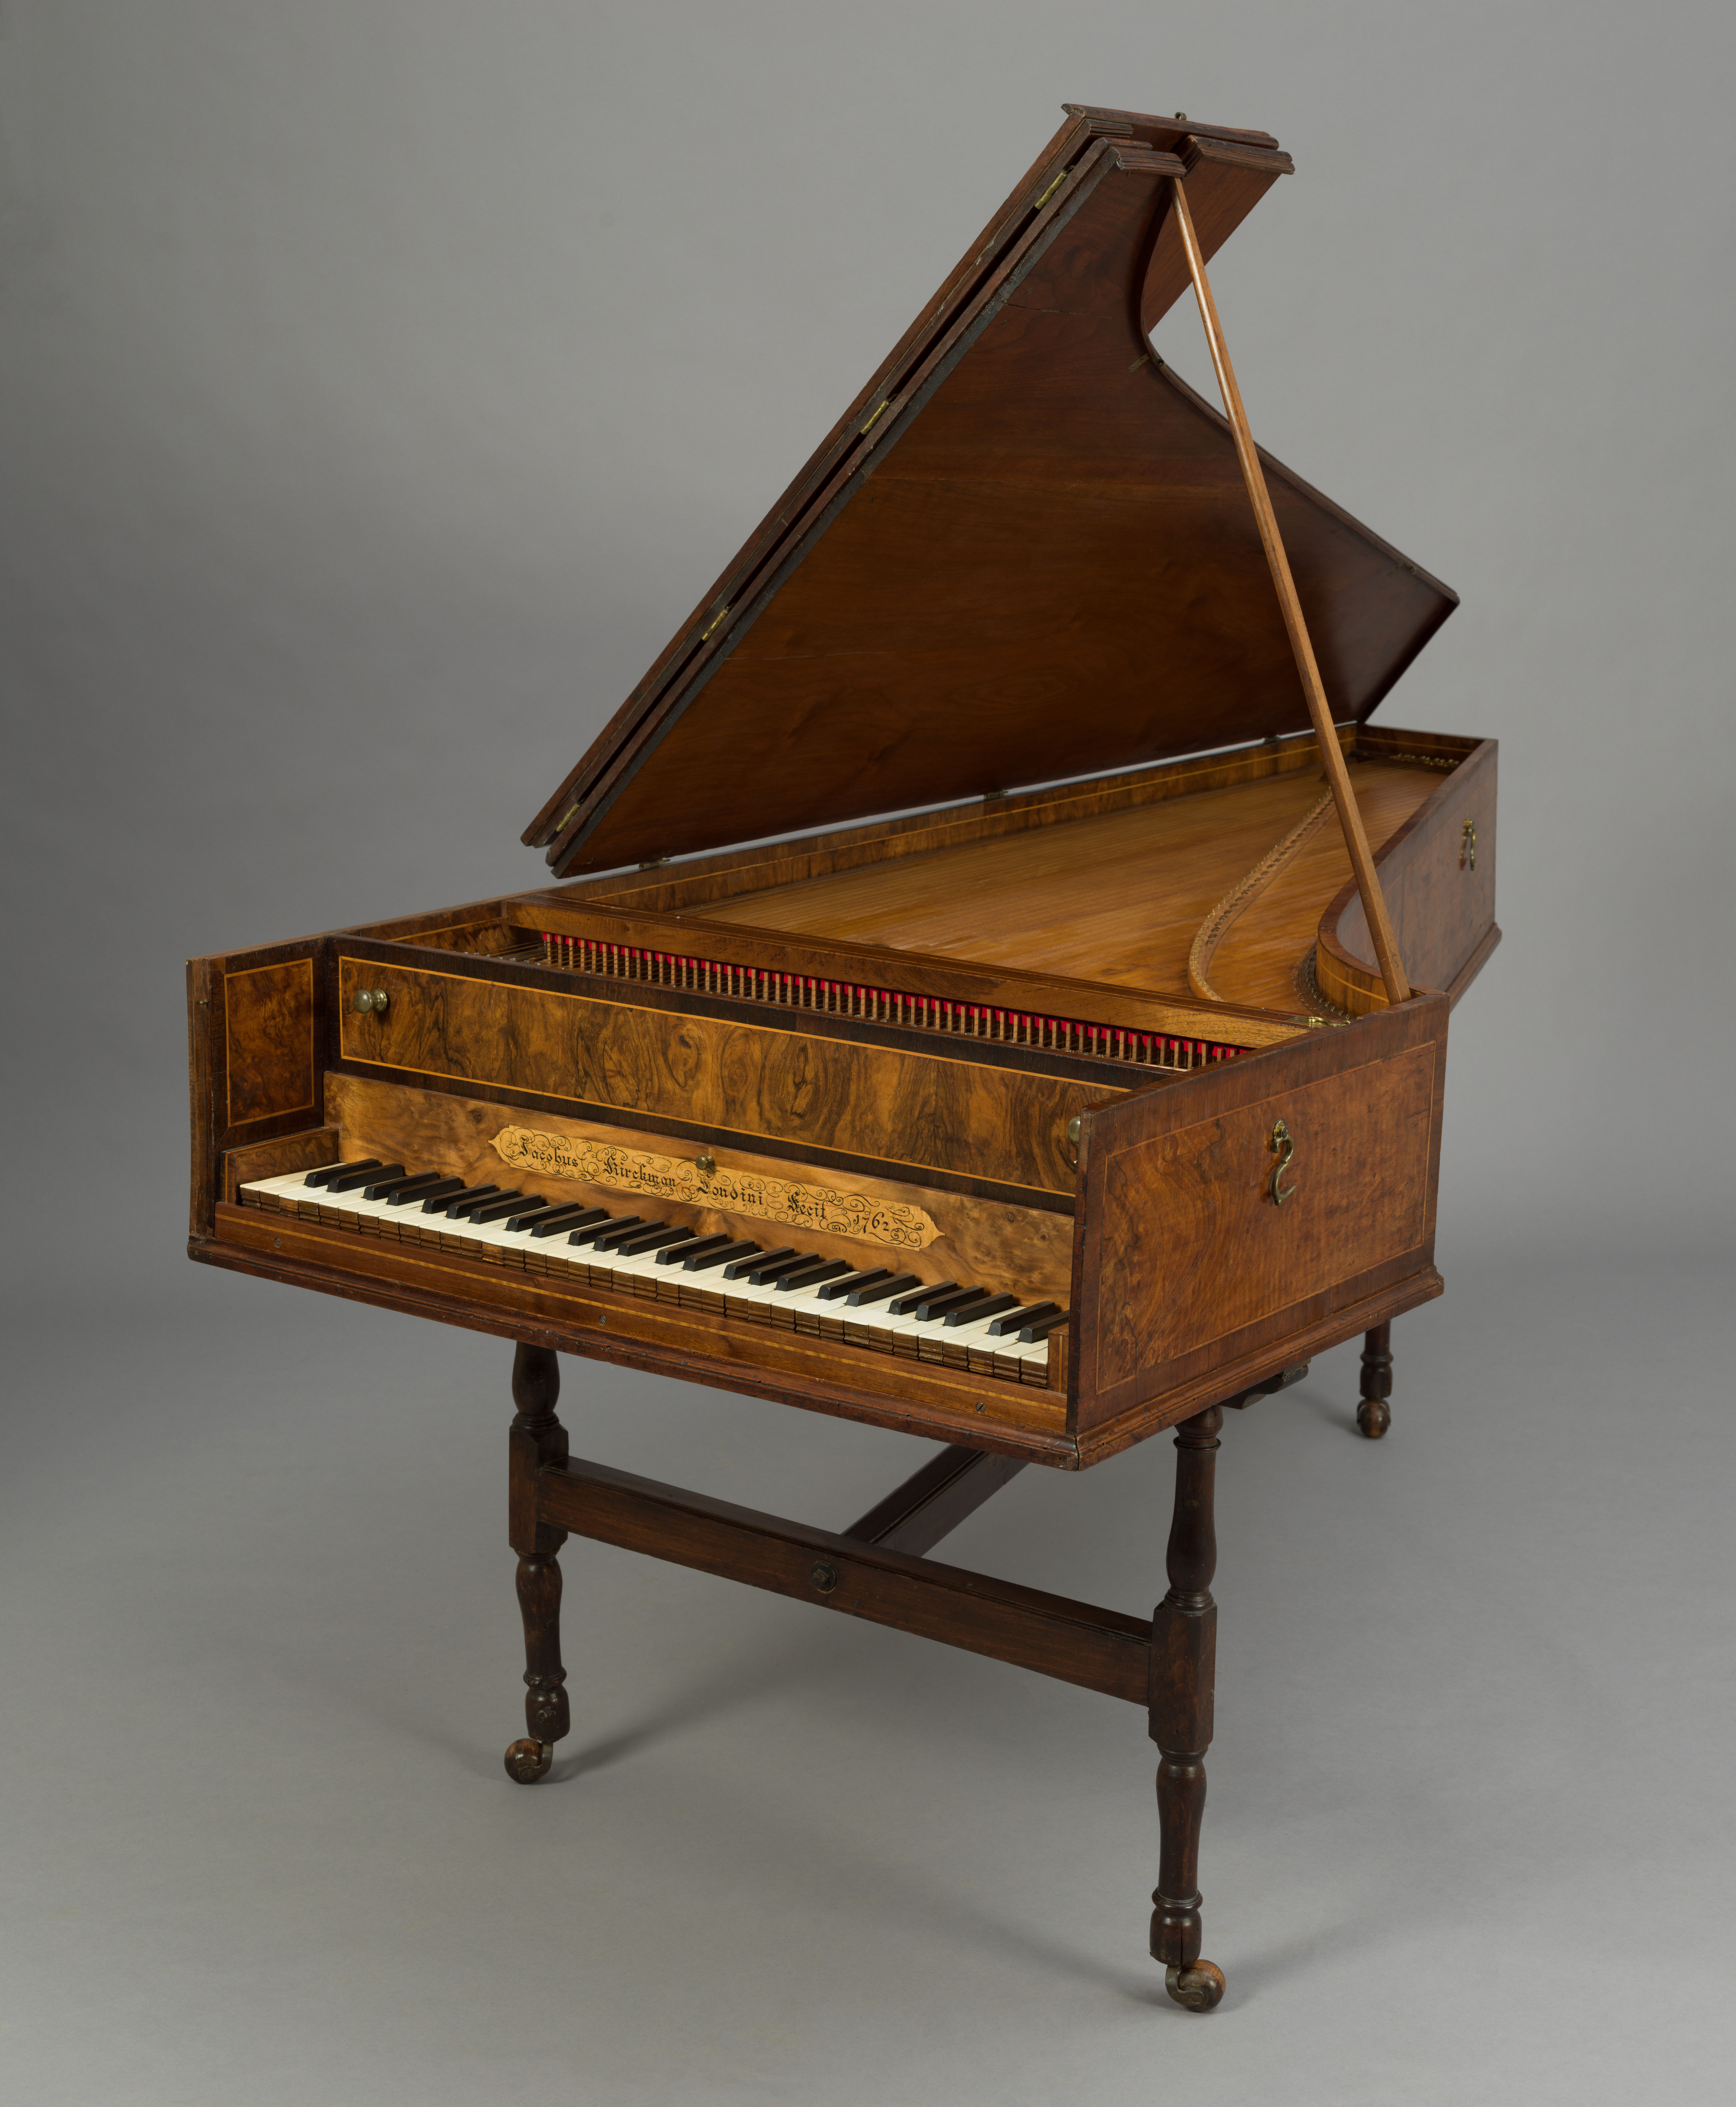  Harpsichord, Jacob Kirkman, London, England, 1762. Museum purchase, 1997-76 